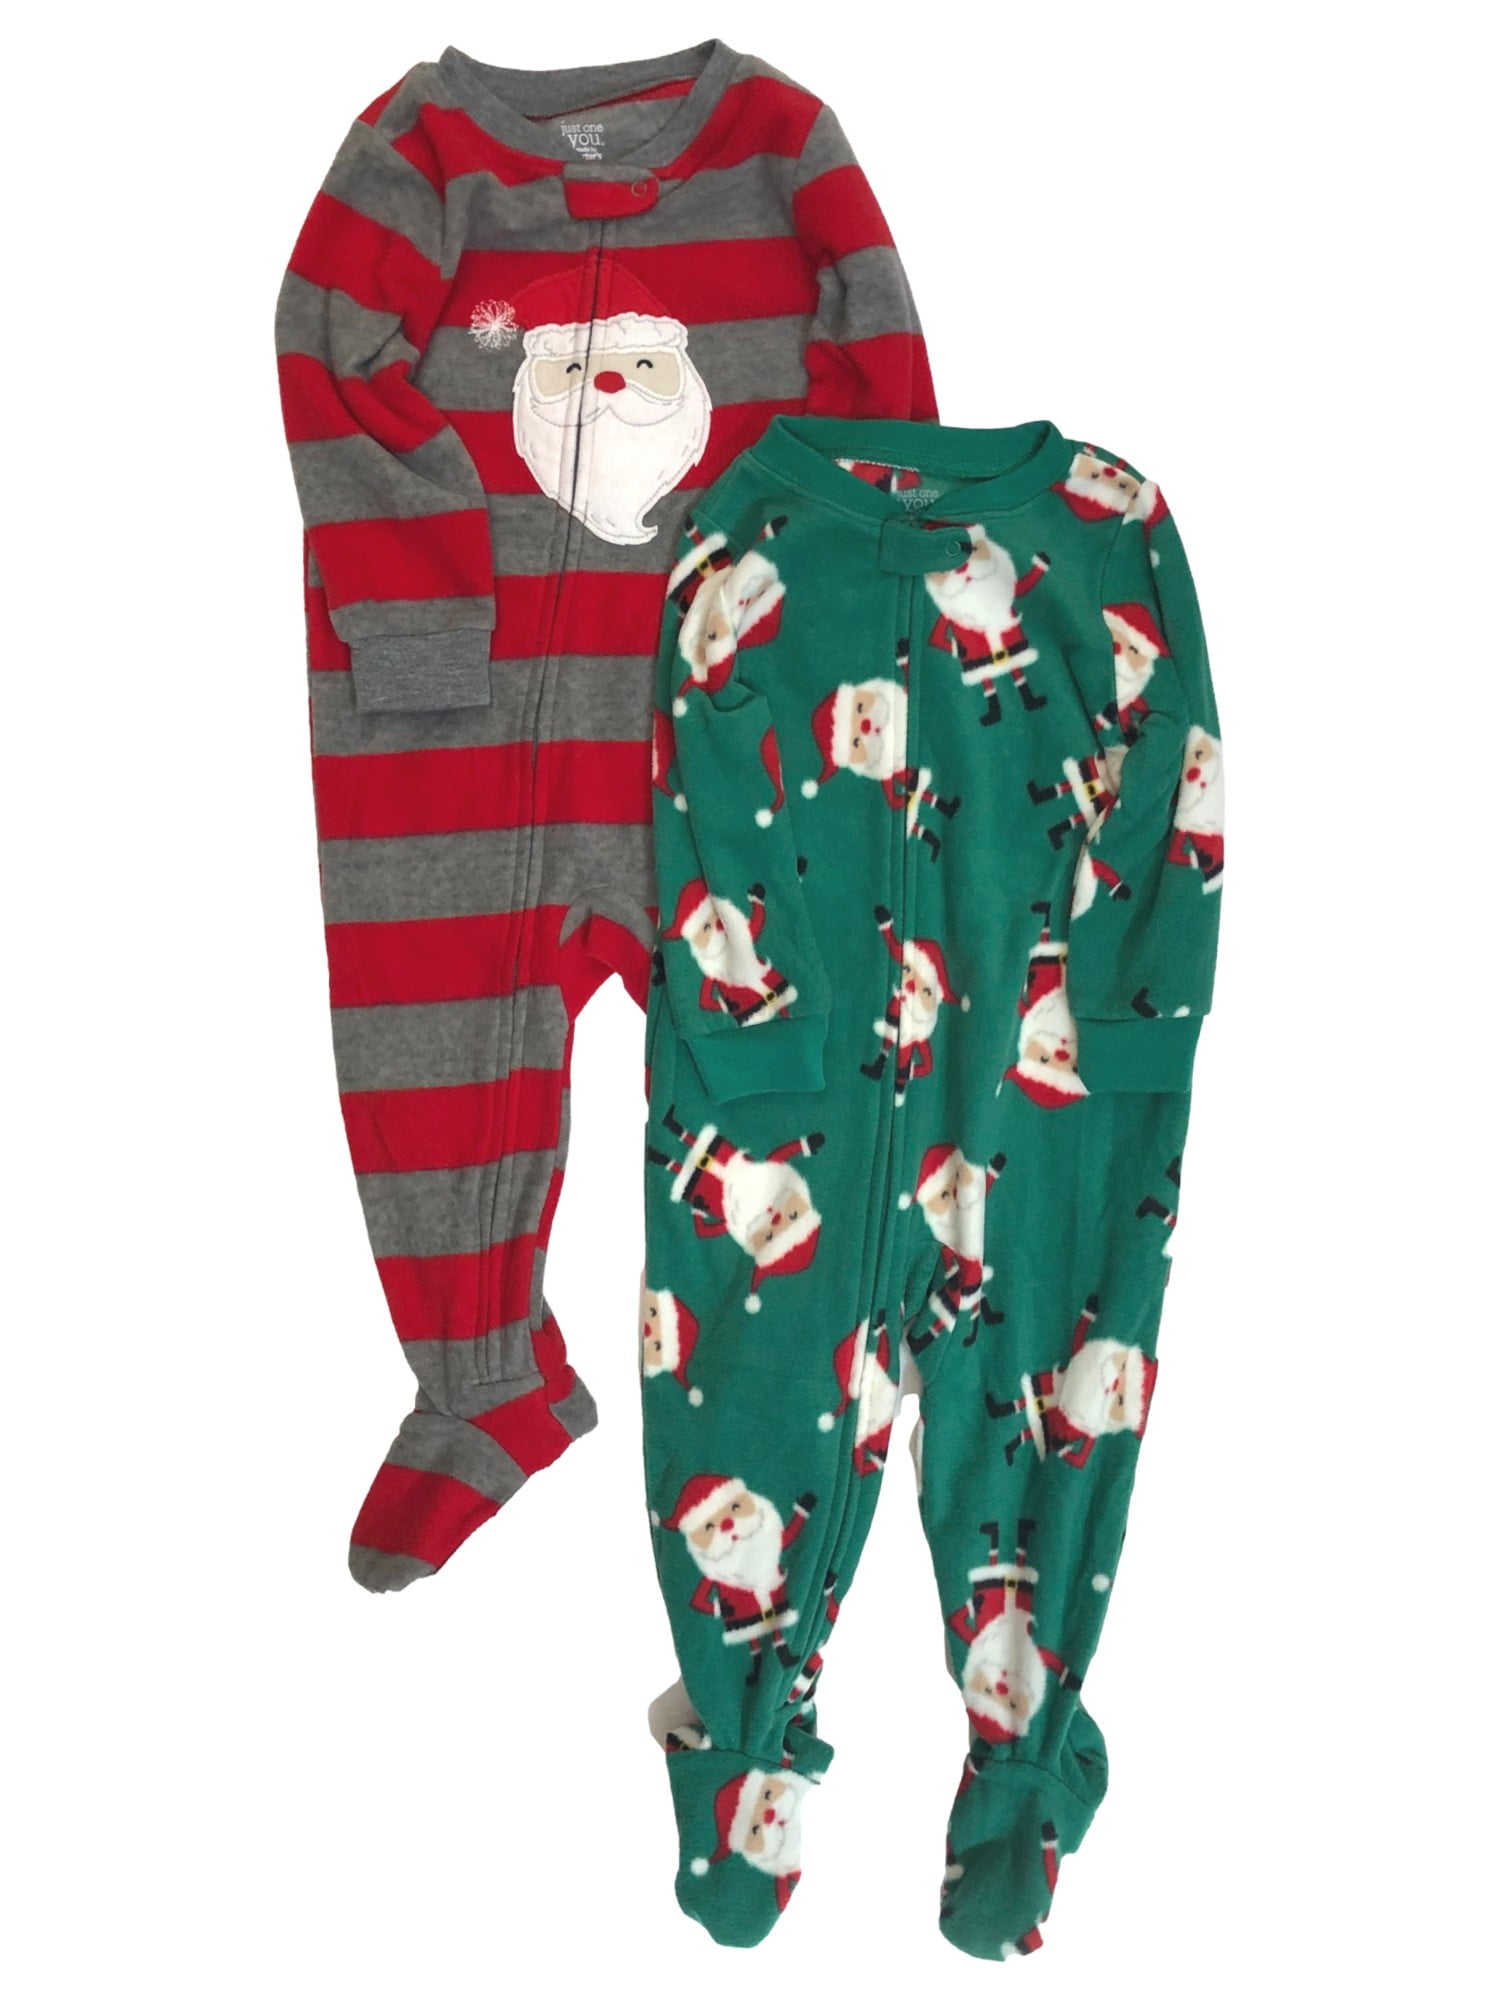 New Carters Infant Boys 2PC Christmas Sleepers Set Santa Claus Reindeer Pajamas 